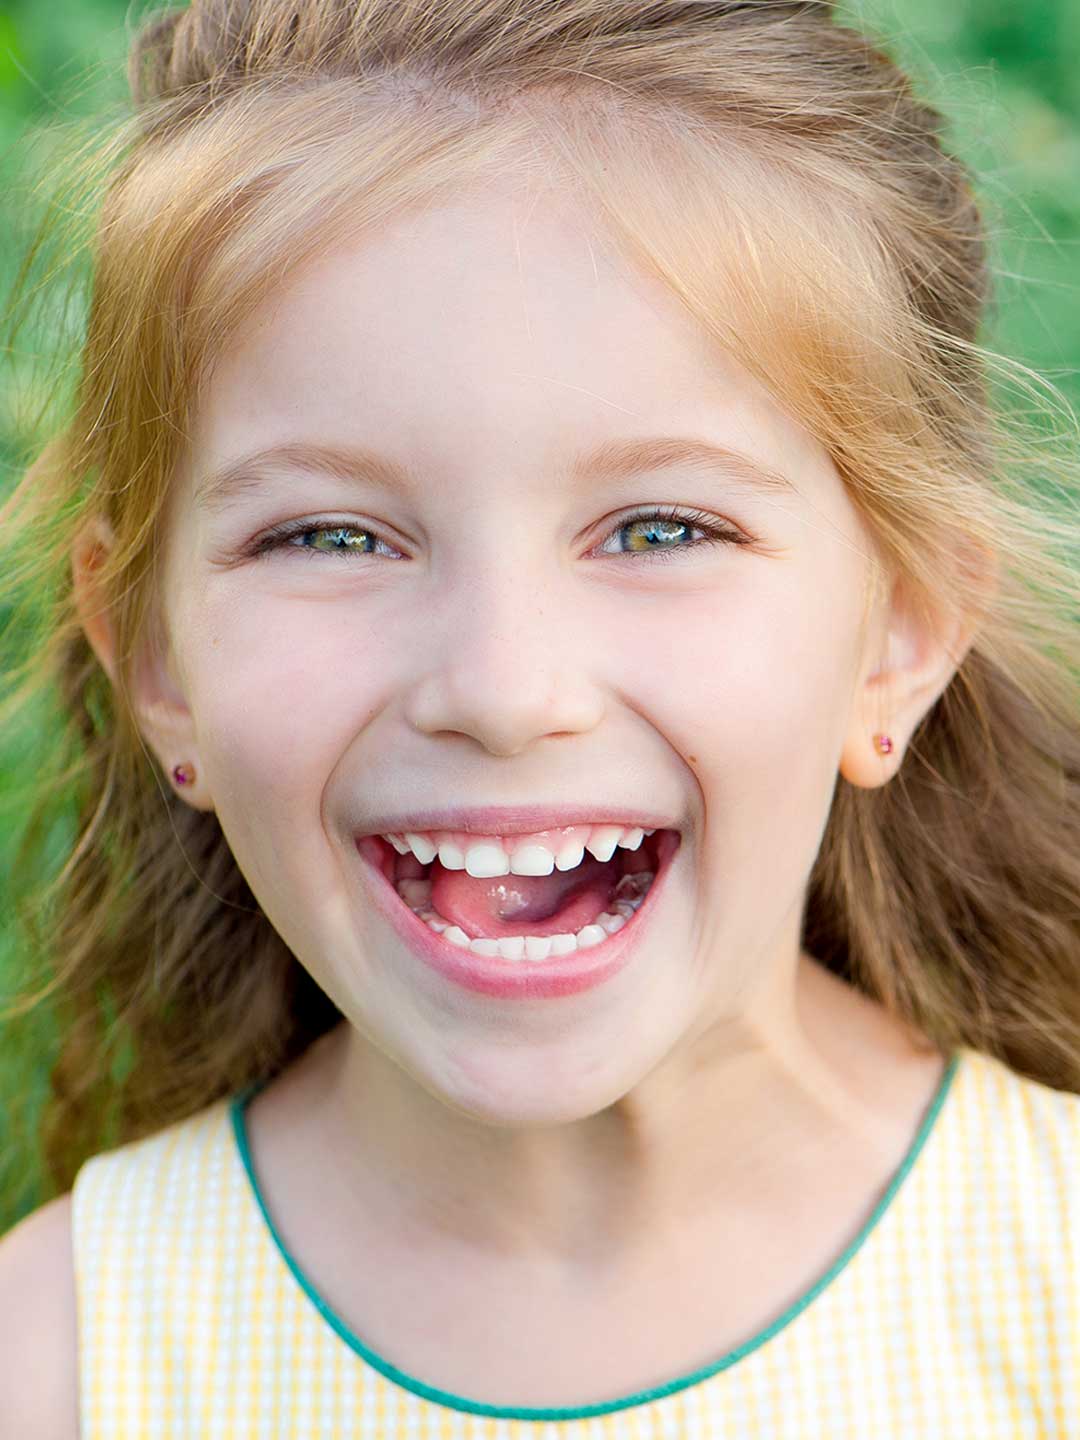 Dental Crowns for Children